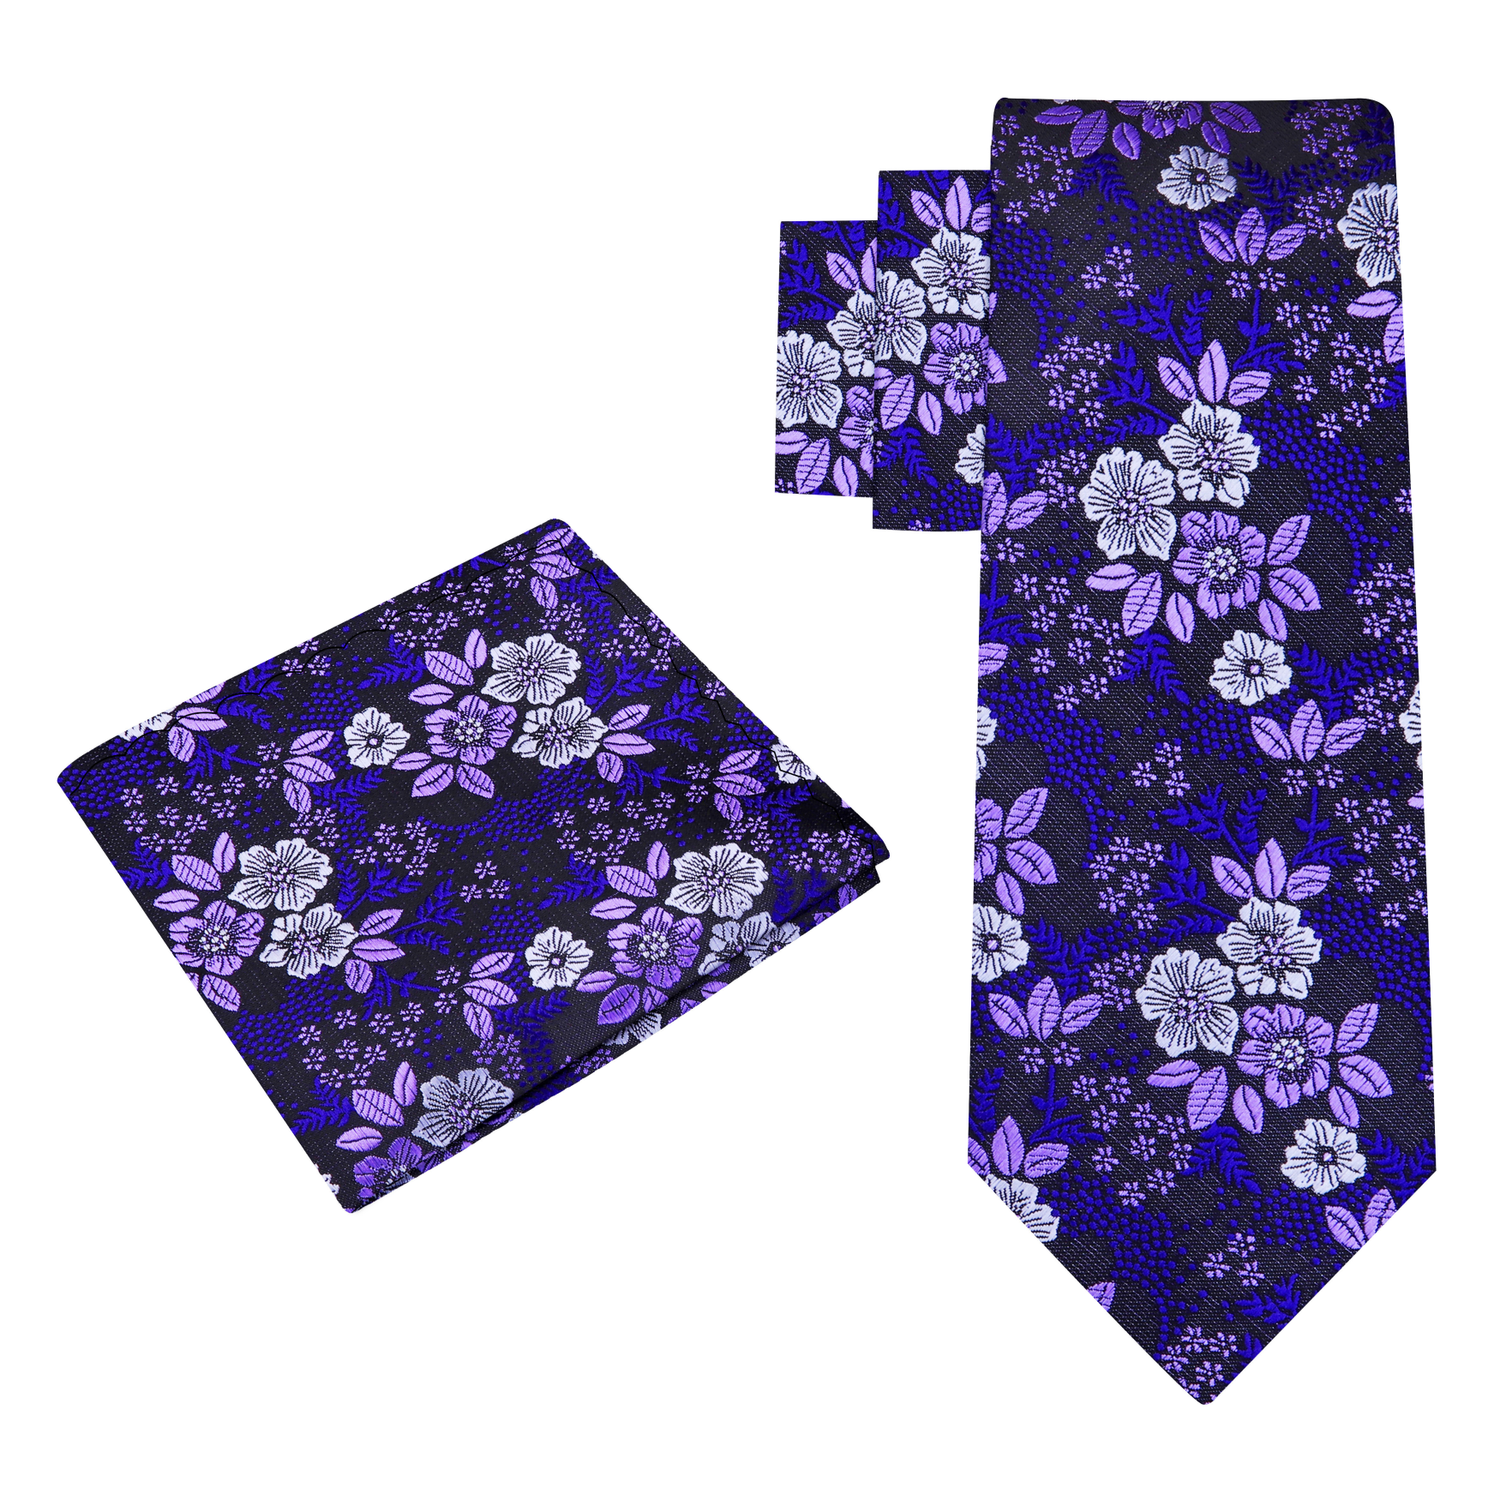 View 2: A Dark Purple, Purple, White Floral Pattern Necktie With Matching Pocket Square